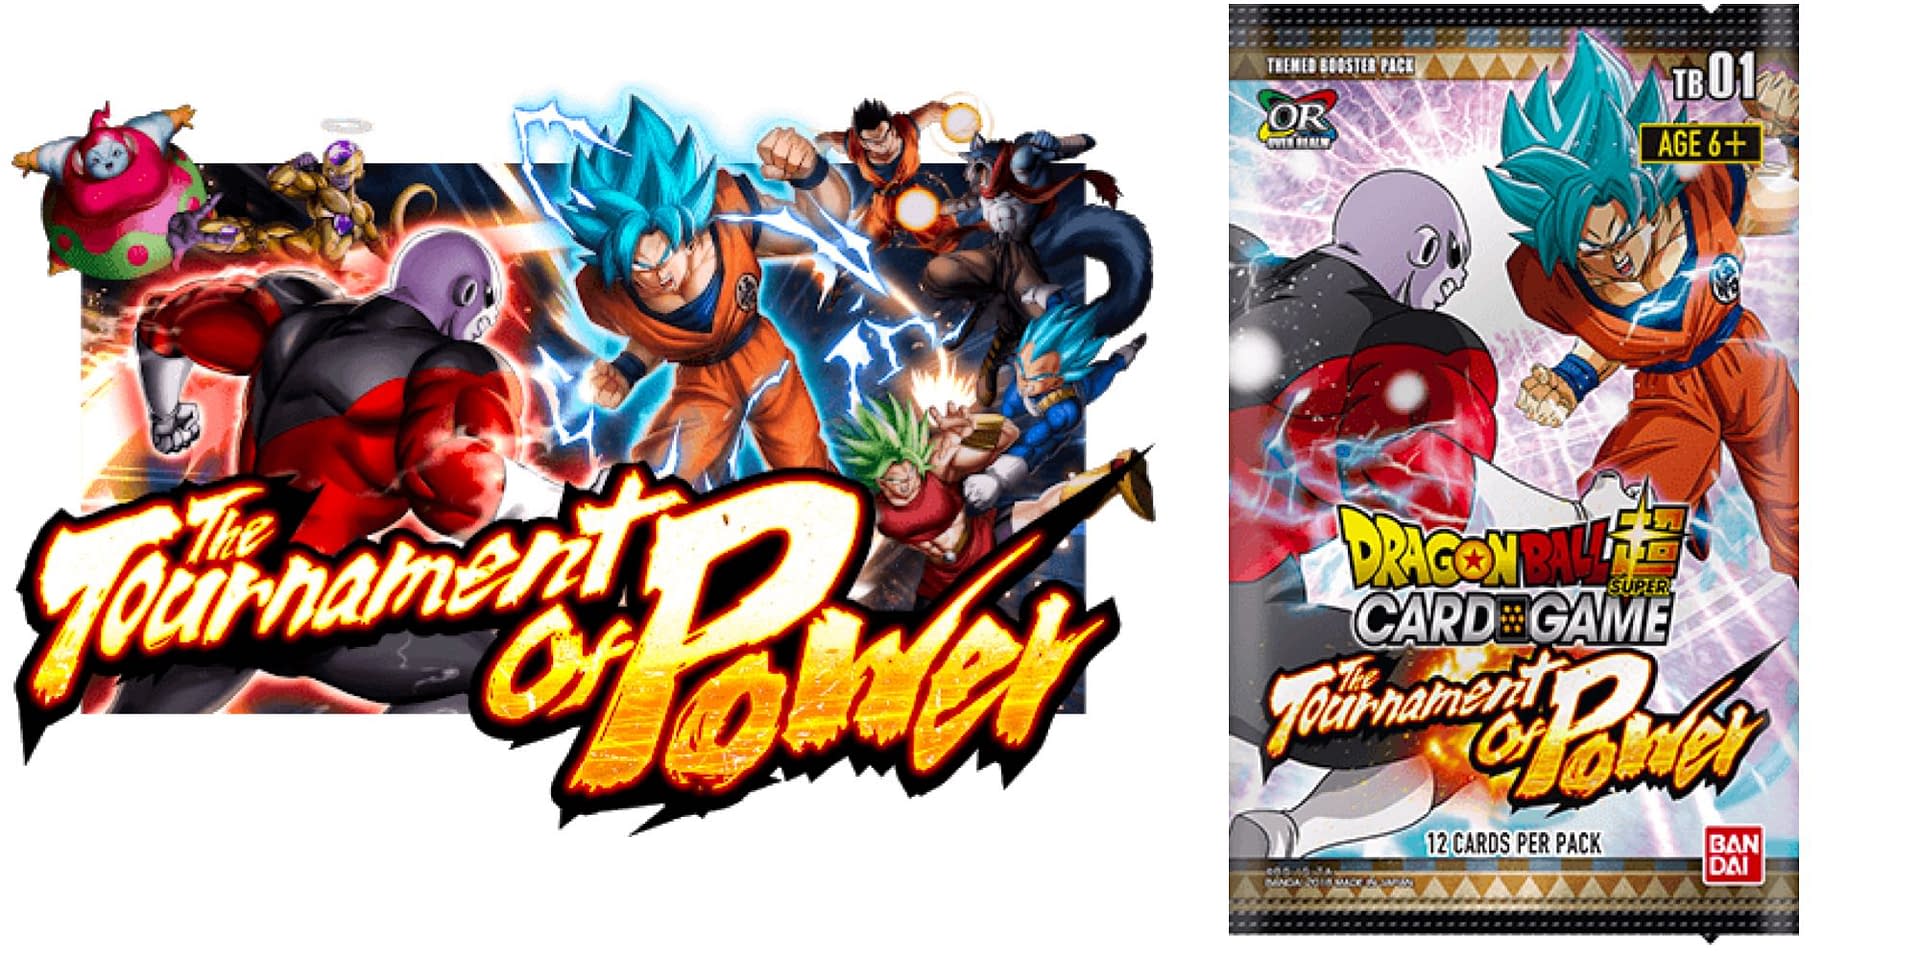 Dragon Ball Super, the Tournament of Power!